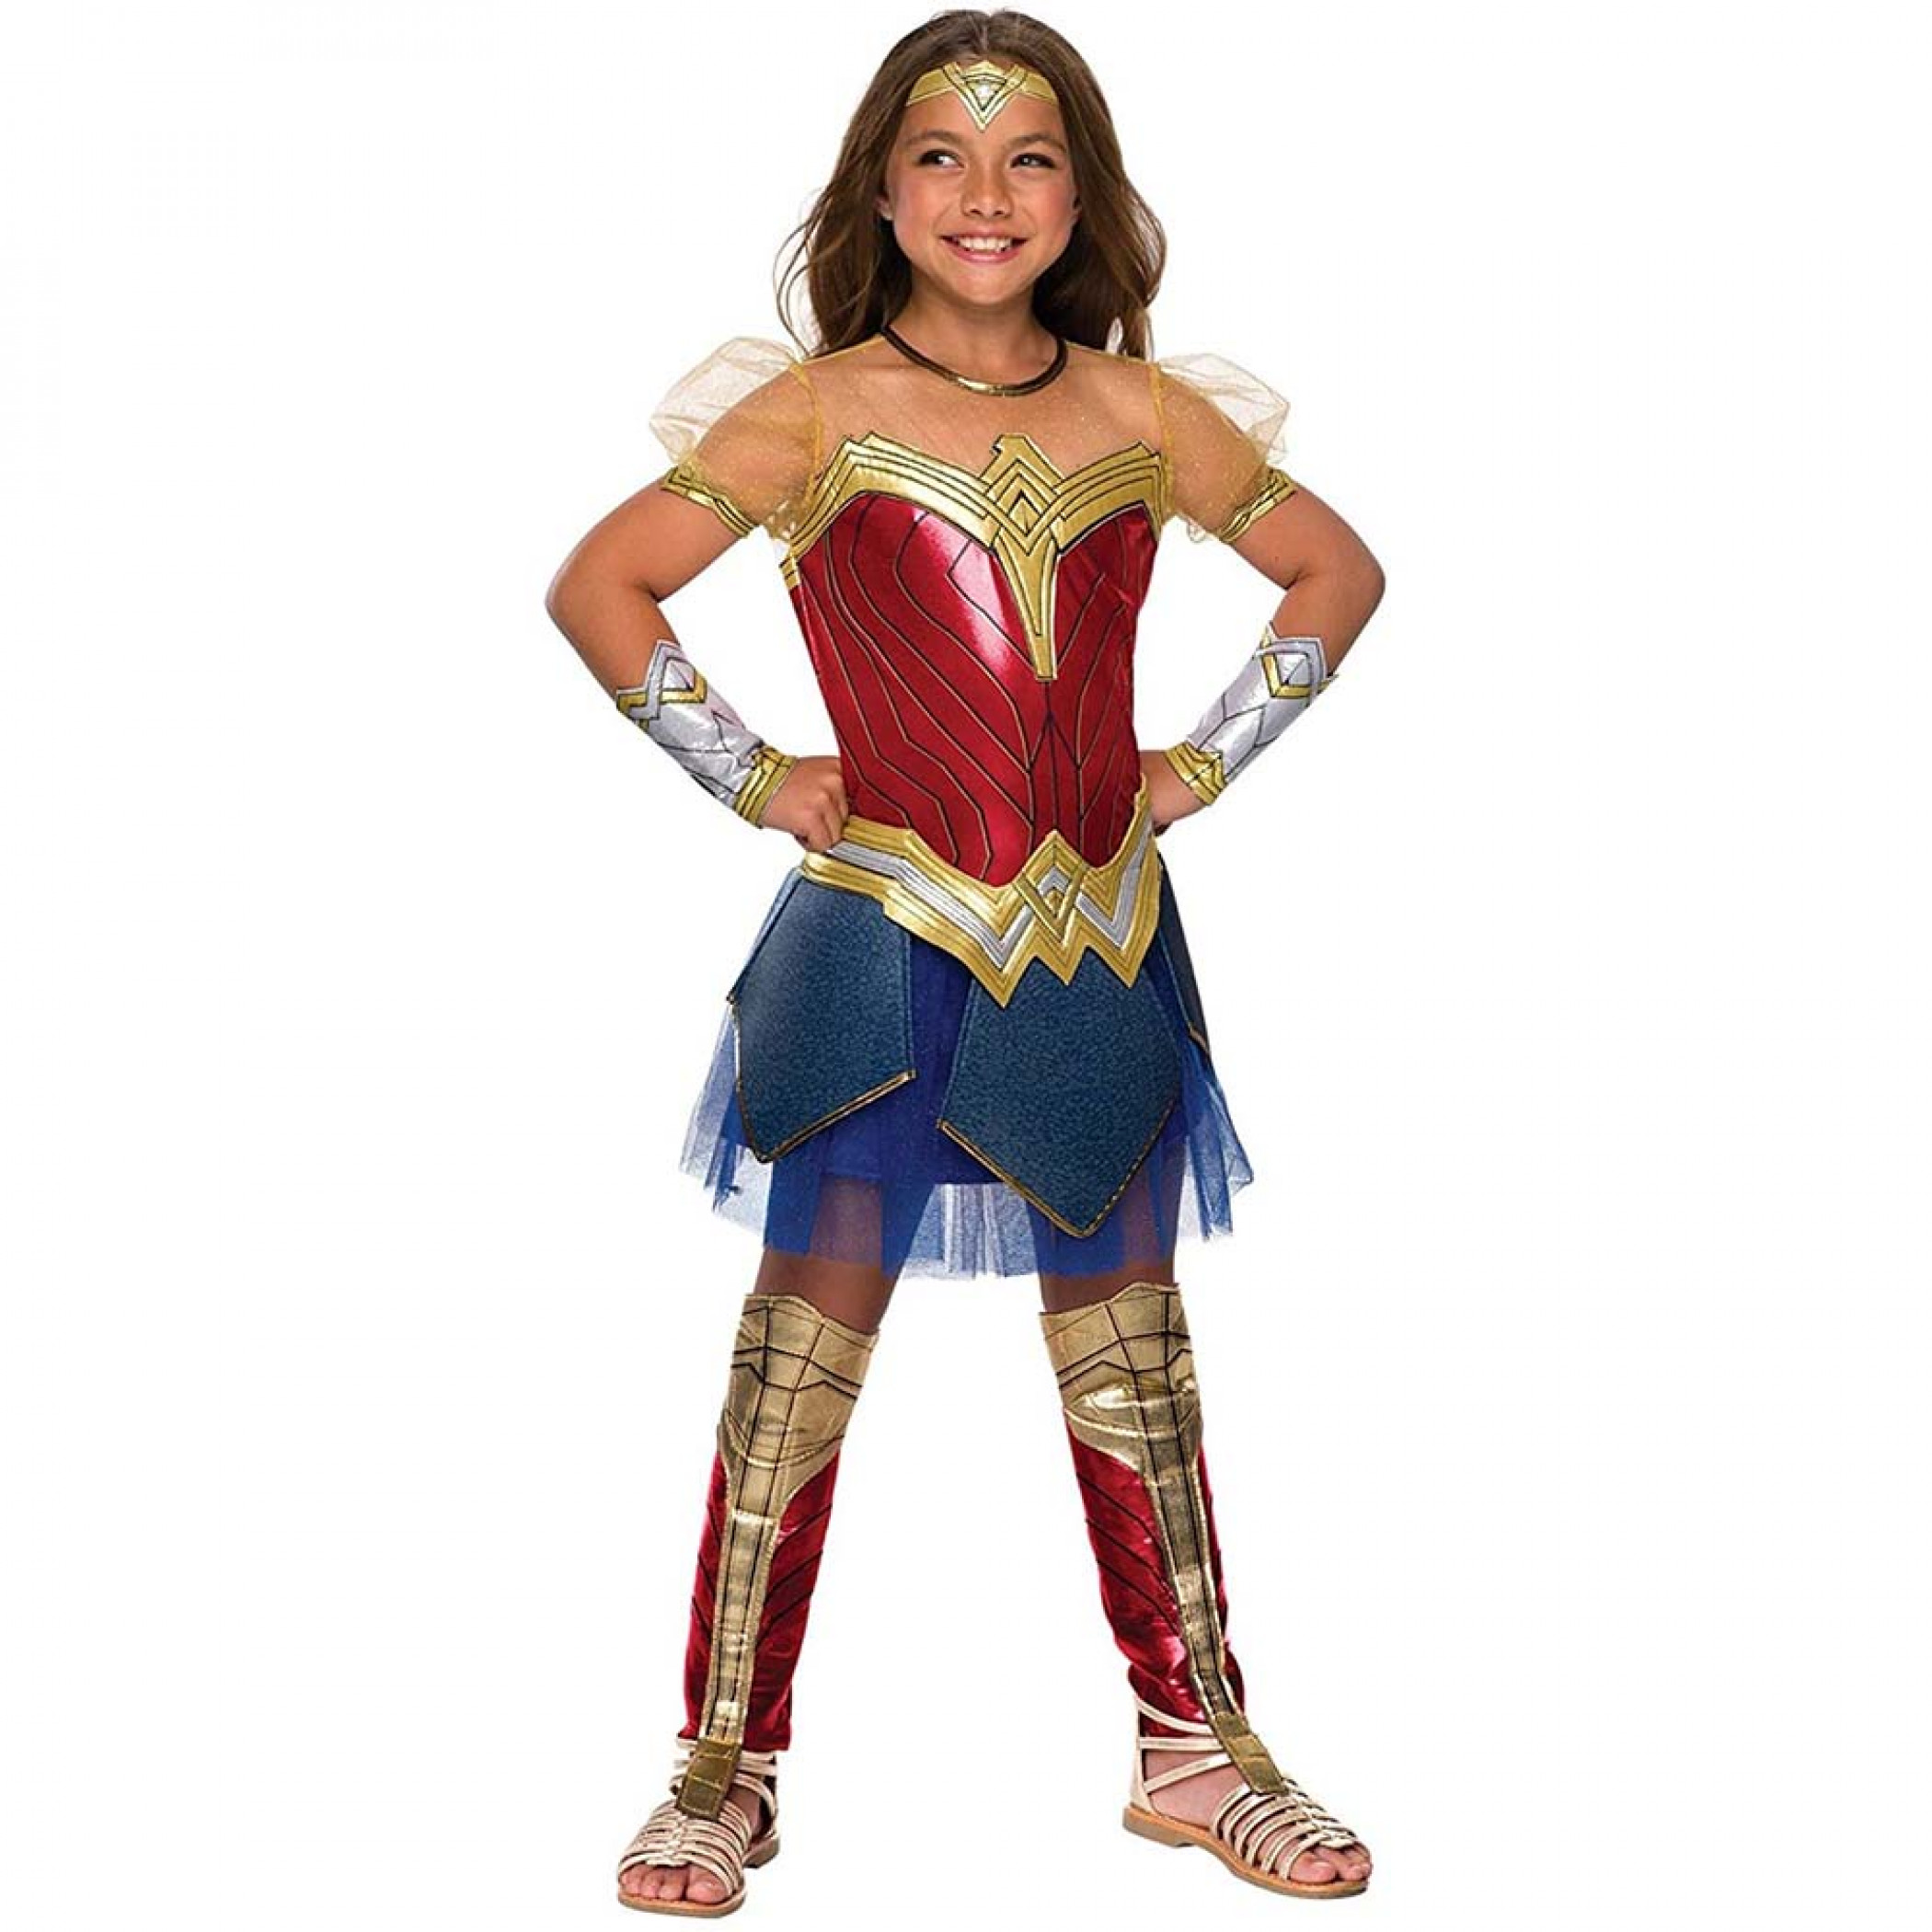 DC Comics Wonder Woman Justice League Deluxe Girl's Costume